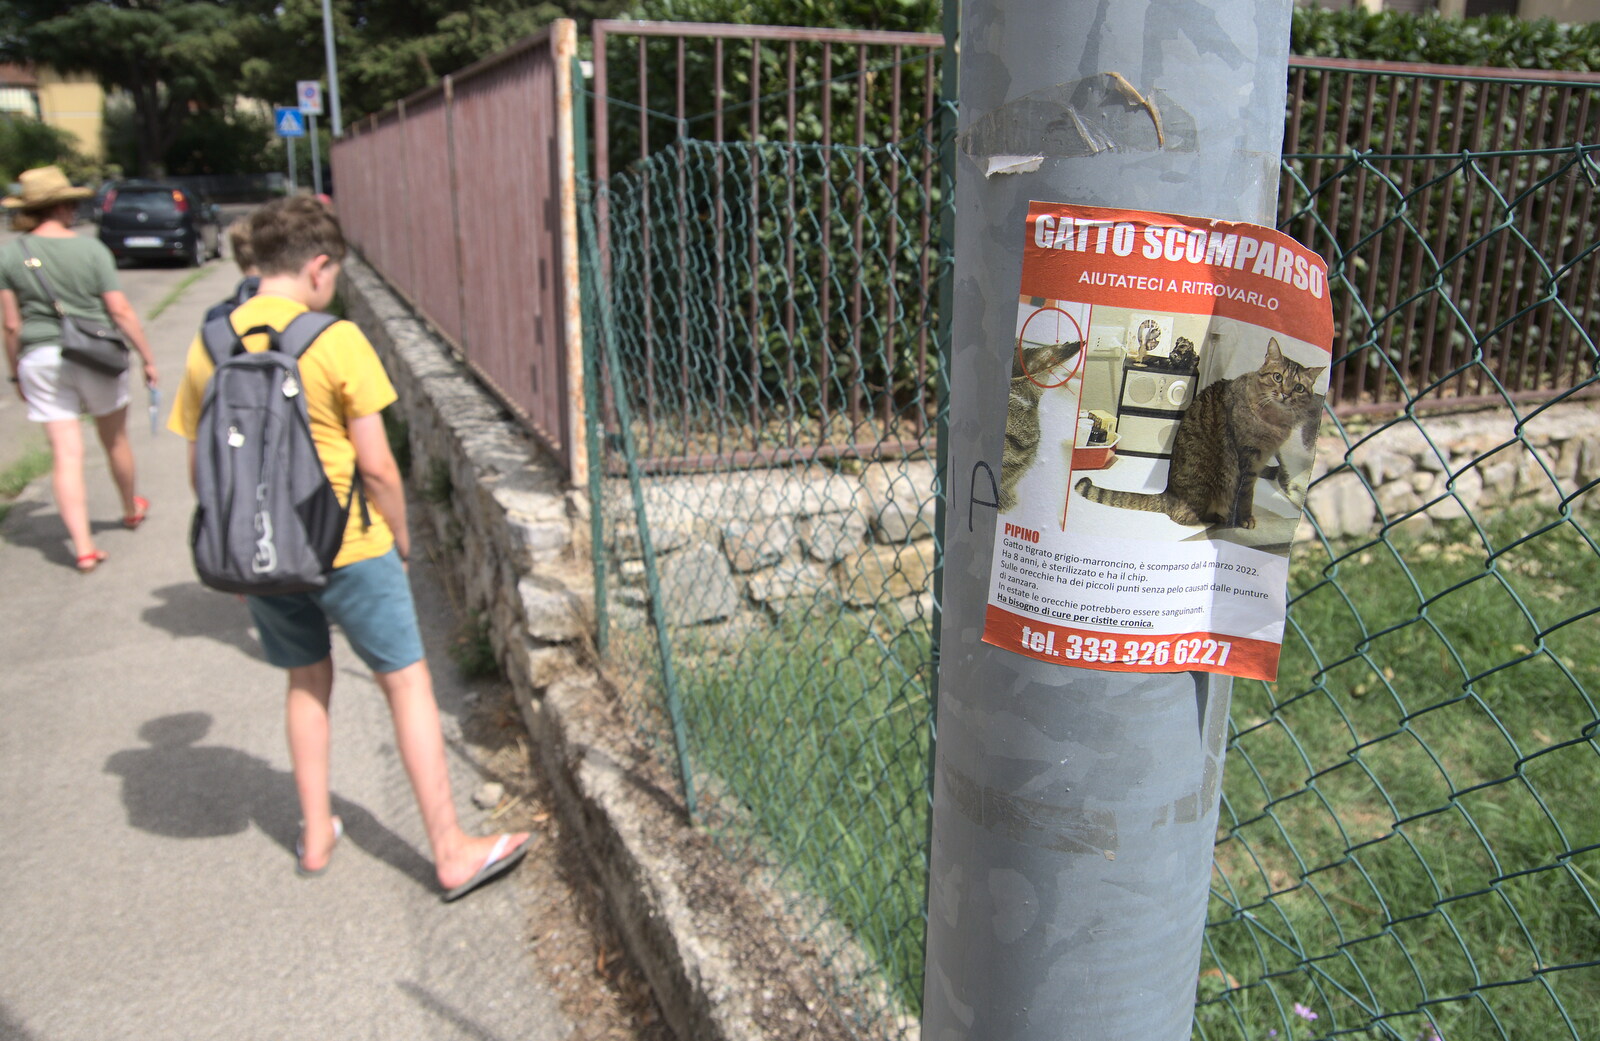 Castiglio Del Lago and Santuario della Verna, Umbria and Tuscany, Italy - 1st September 2022: There's a Lost Cat poster on a lamppost